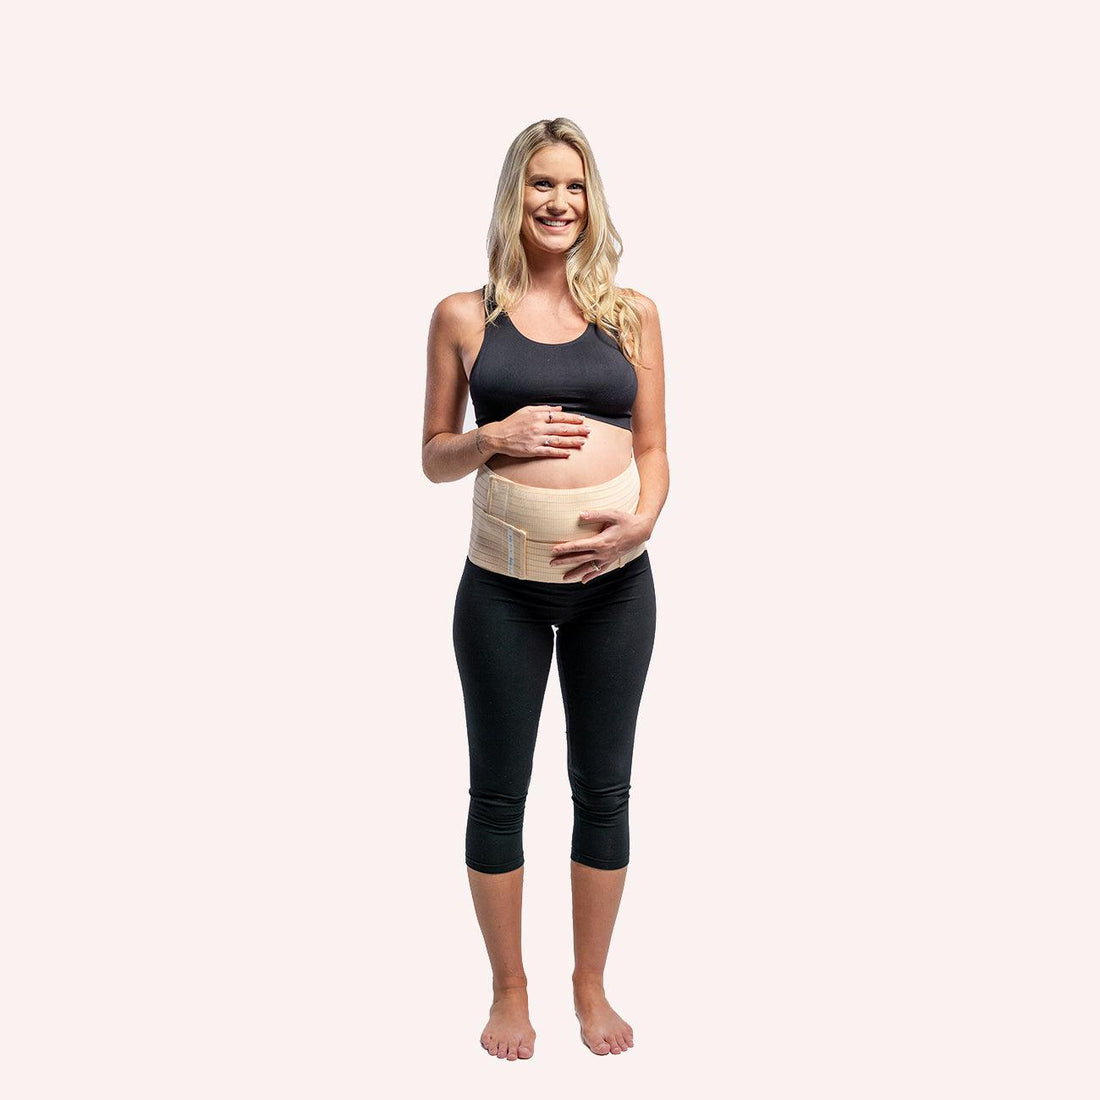 Kayla Itsines - I've been wearing beyond yoga maternity leggings